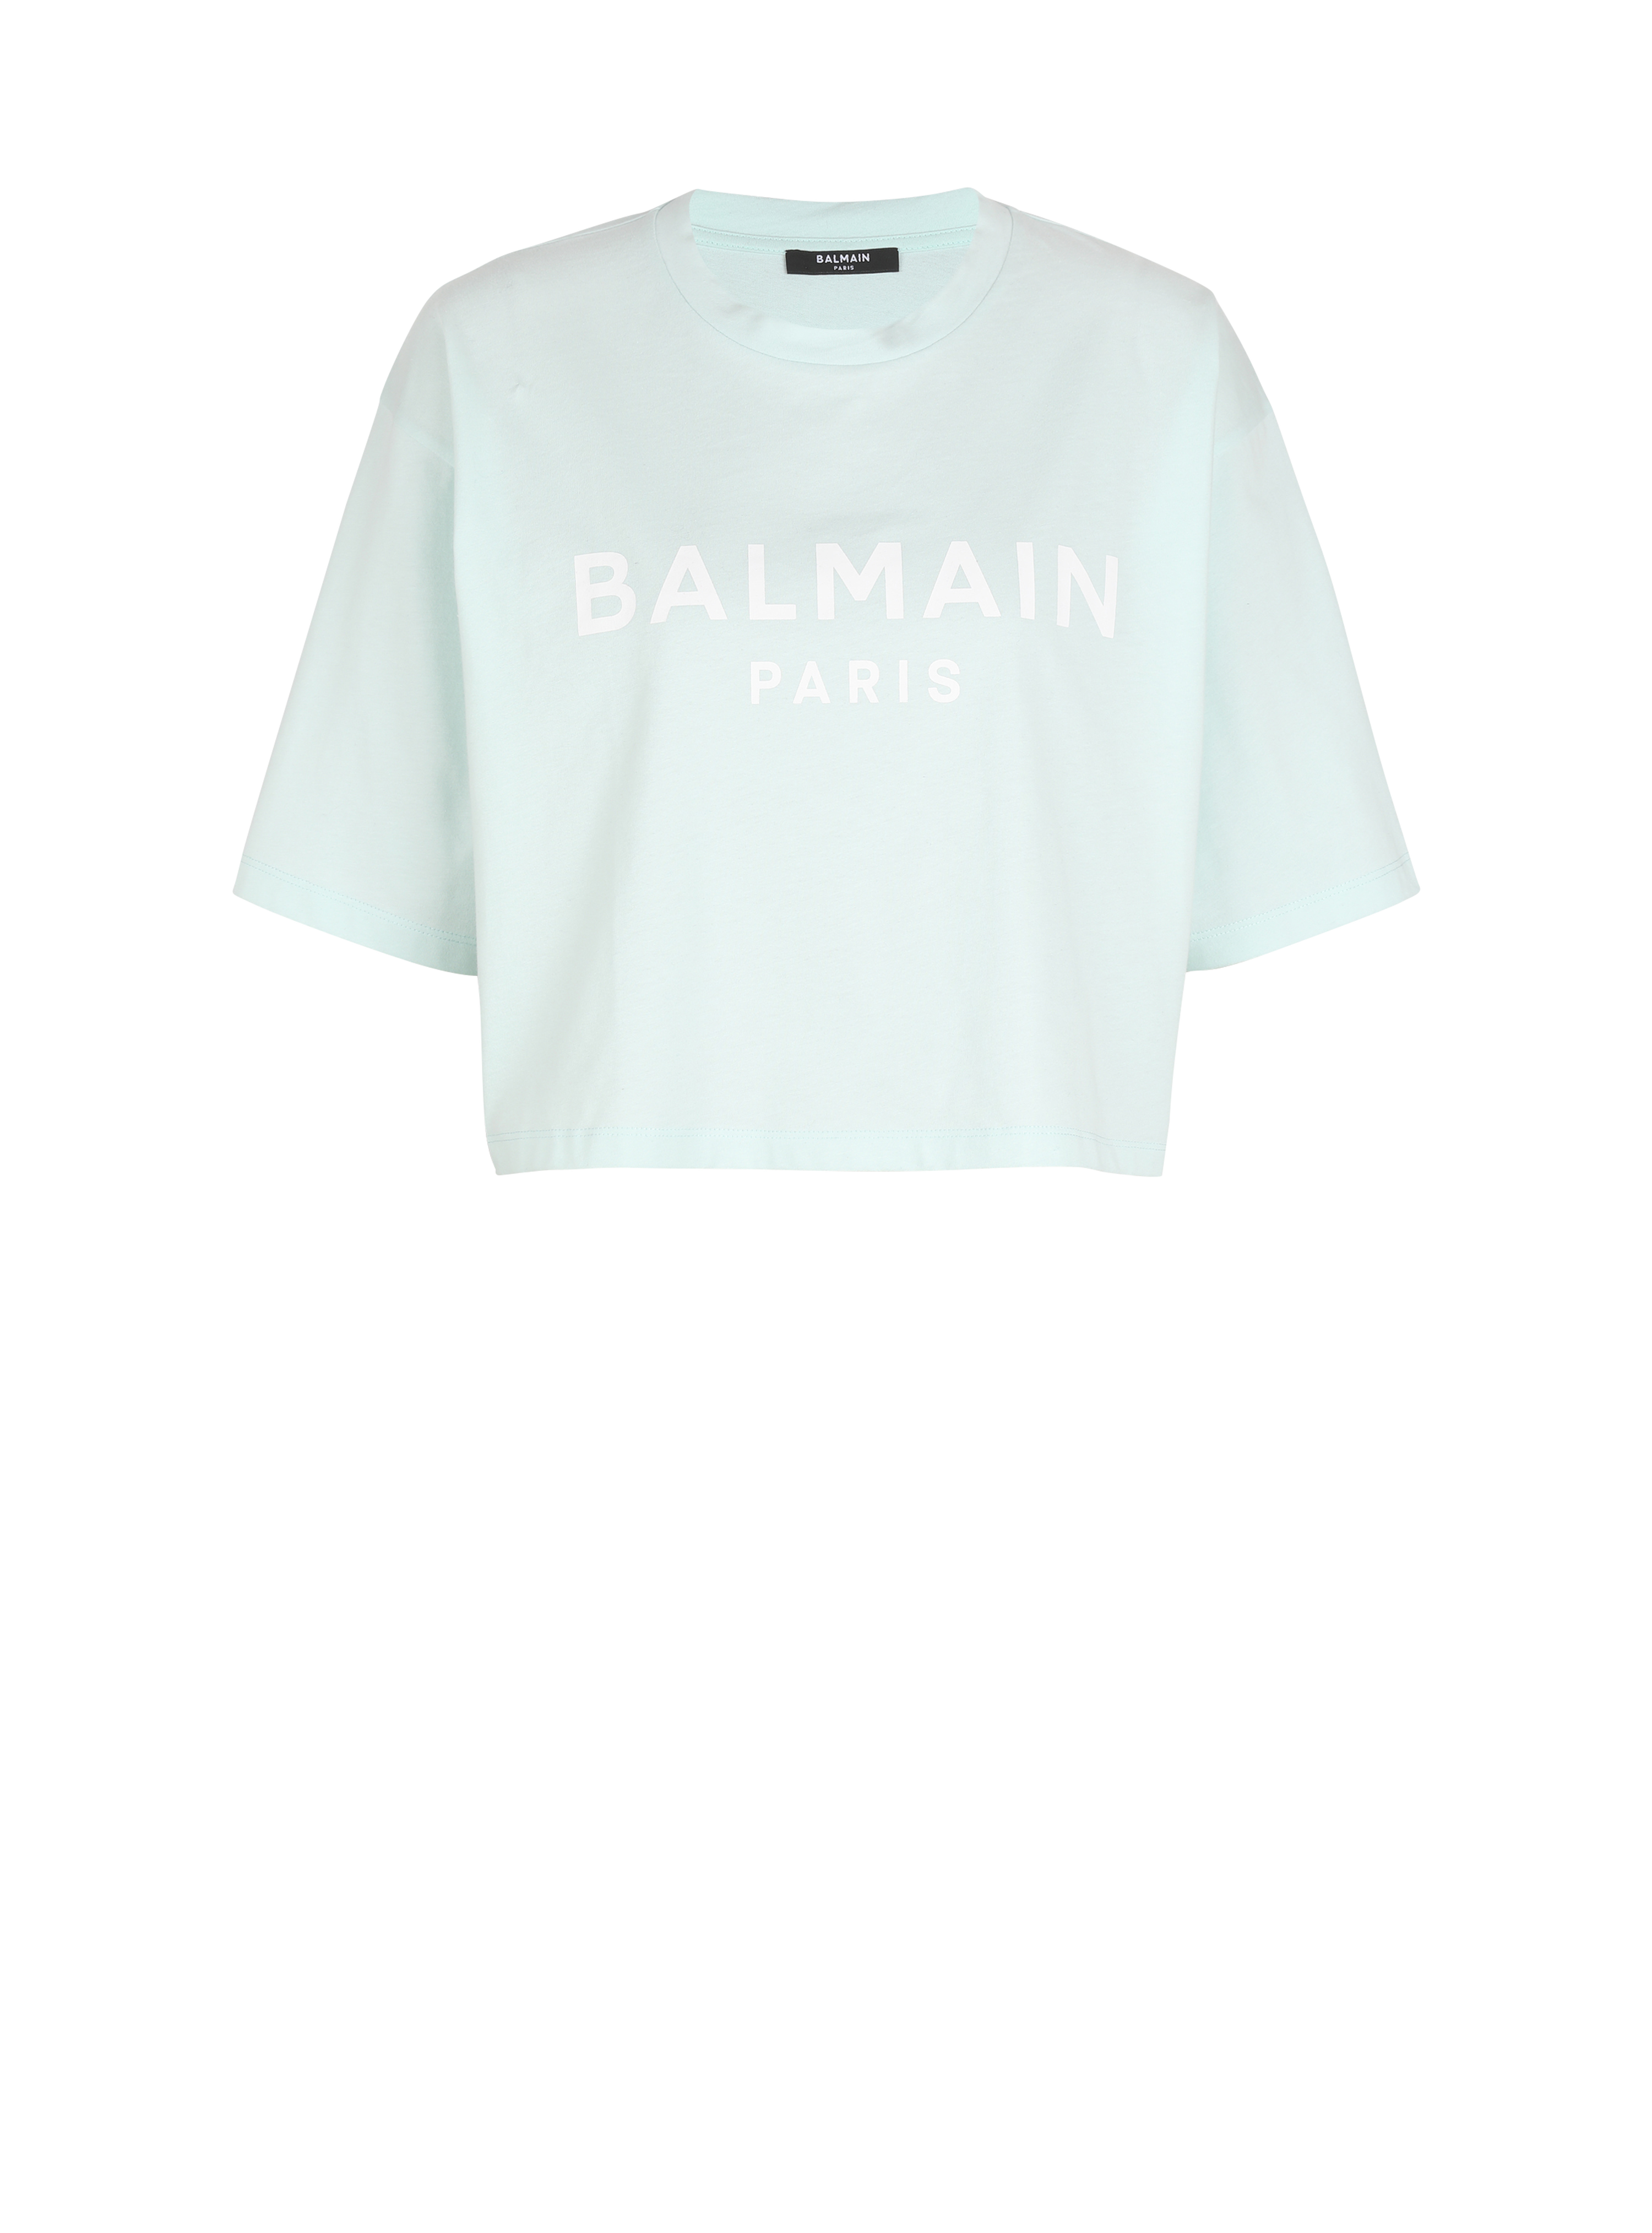 Cropped eco-designed cotton T-shirt with Balmain logo print, green